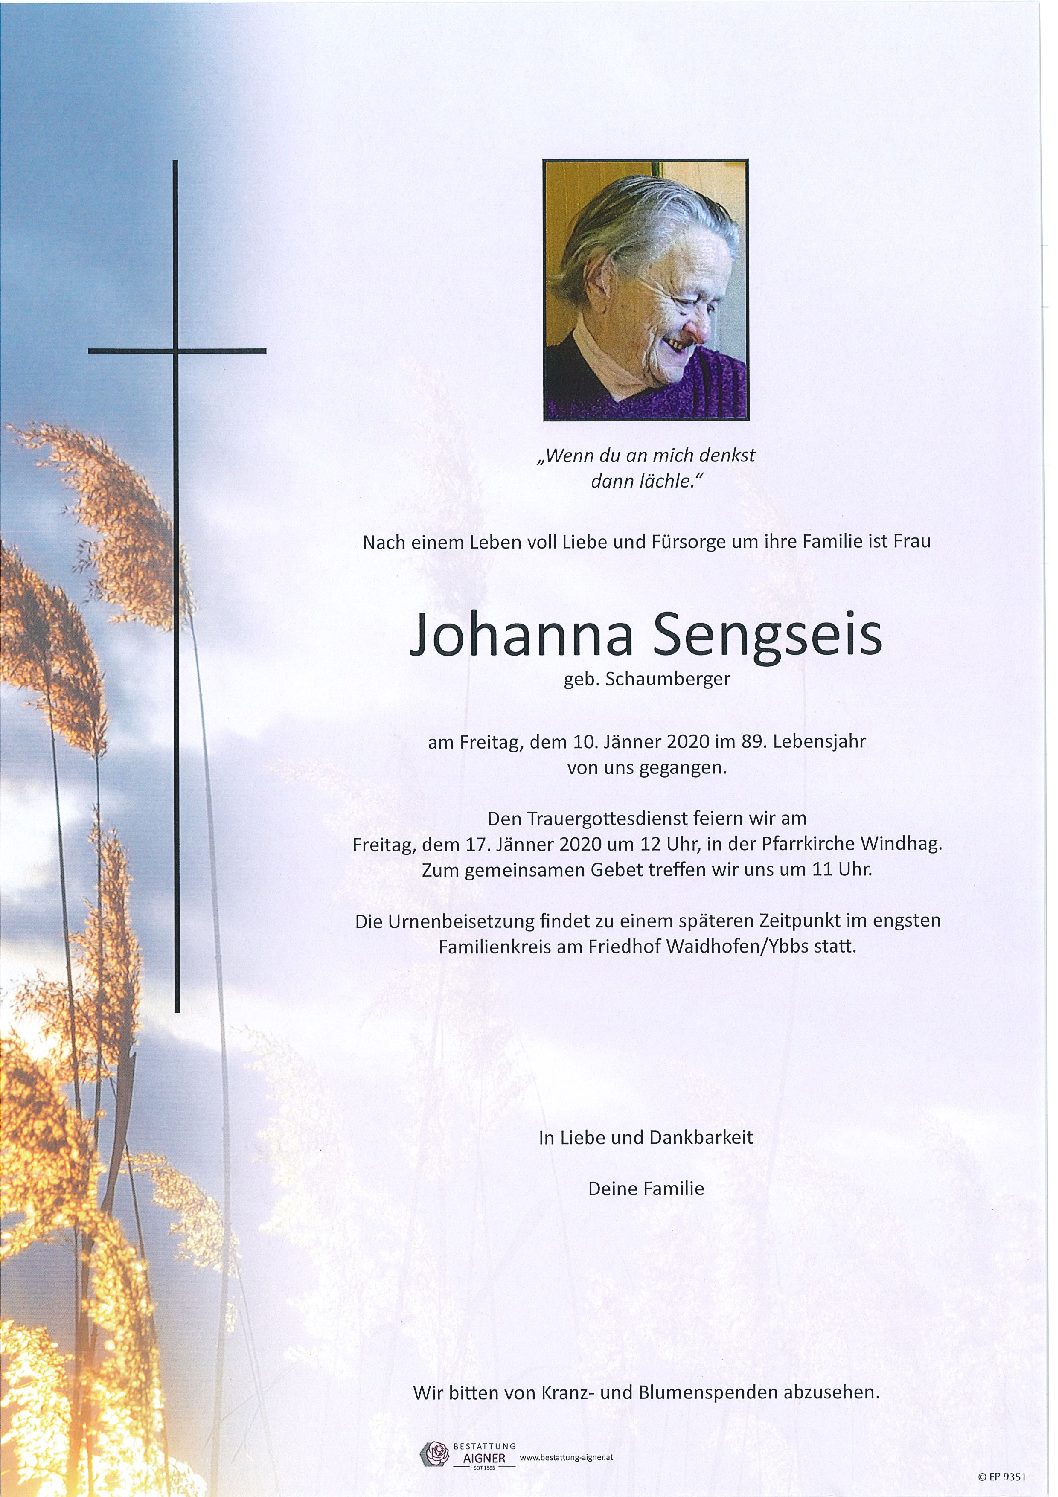 Johanna Sengseis